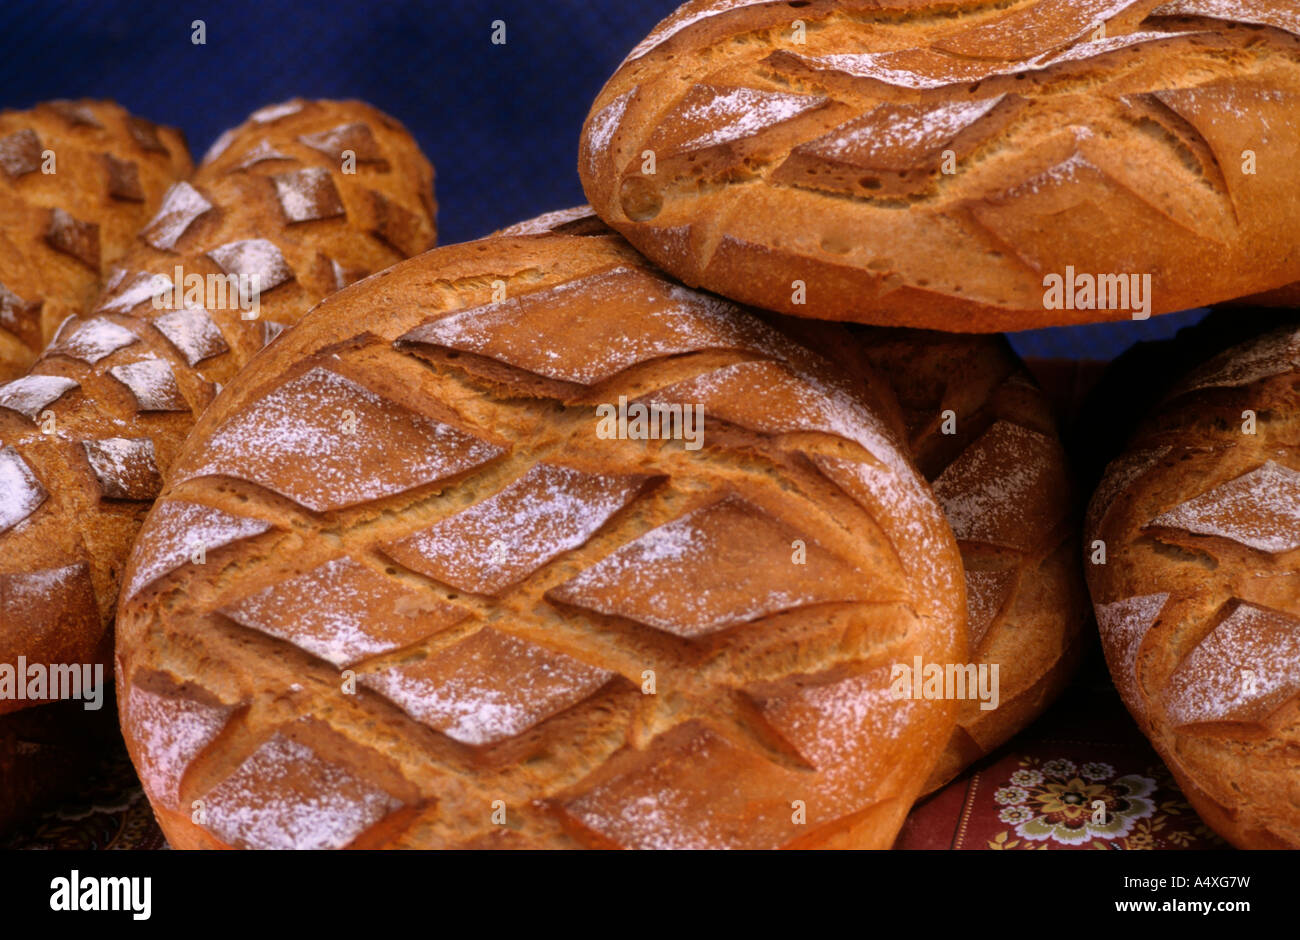 Piles of freshly baked loaves of artisan bread, France Stock Photo